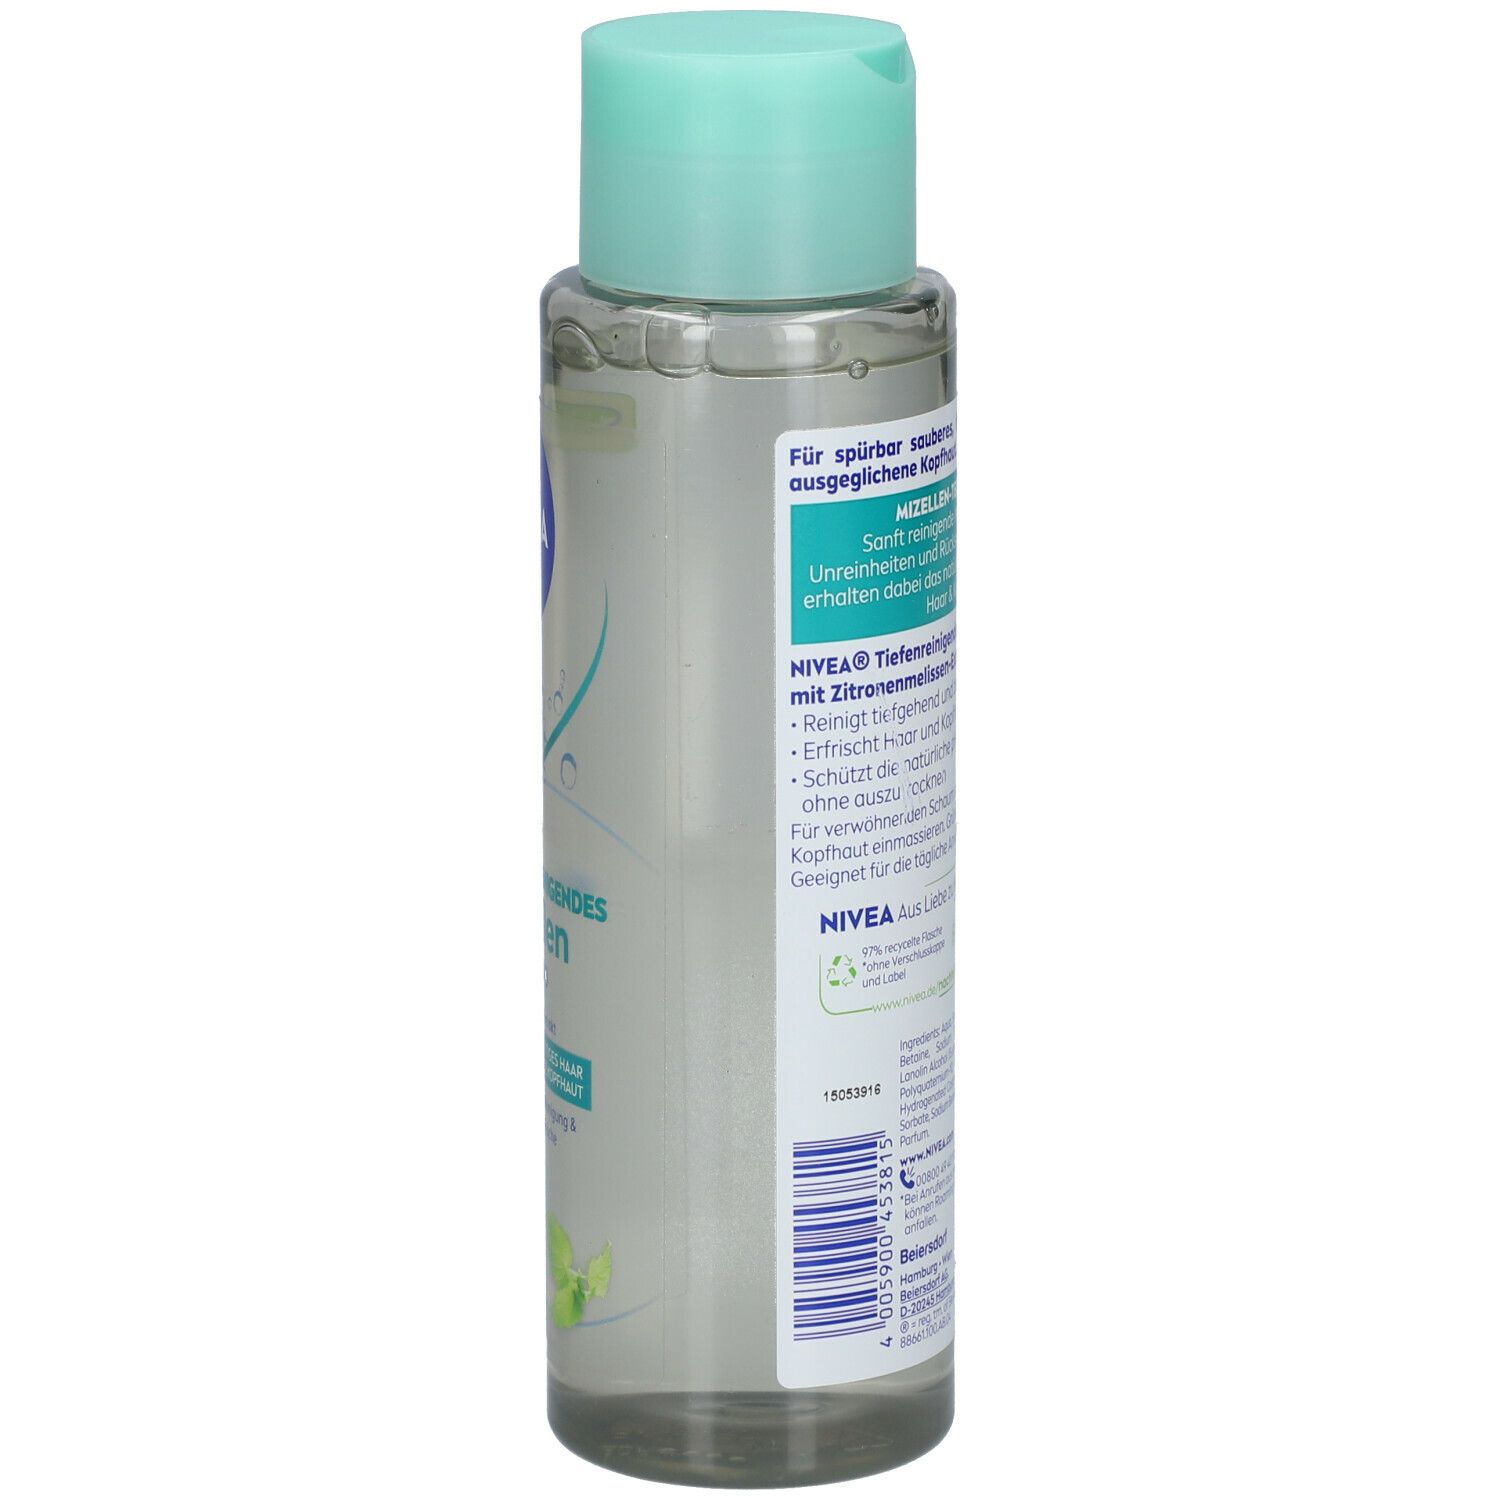 NIVEA® Hair Care Tiefenreinigendes Mizellen Shampoo